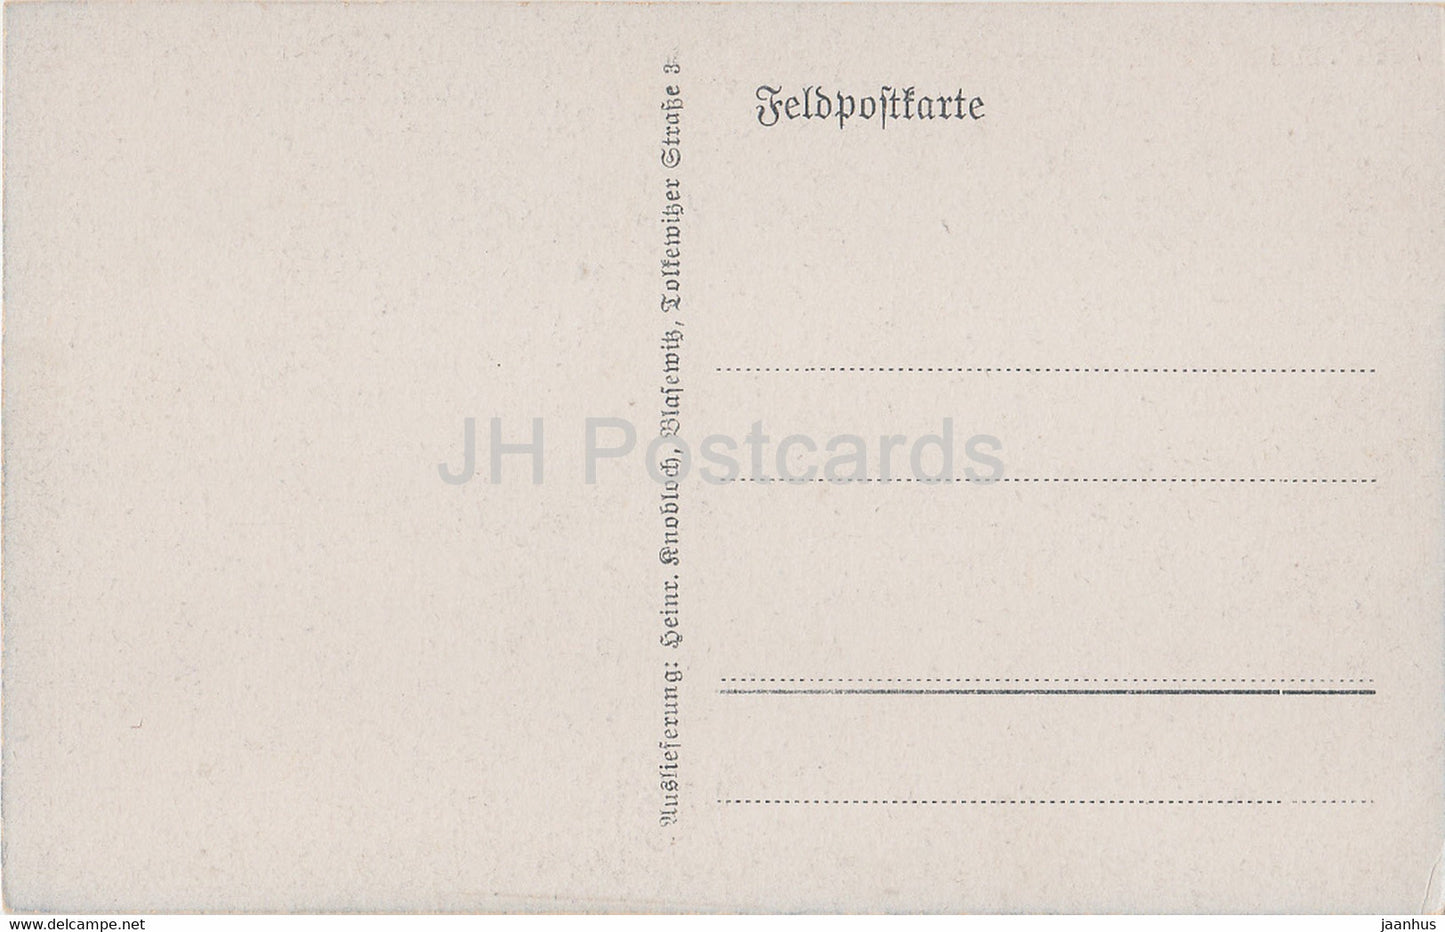 Peronne - Markt und Rathaus - Feldpostkarte - military - horse - 208 - old postcard - France - used